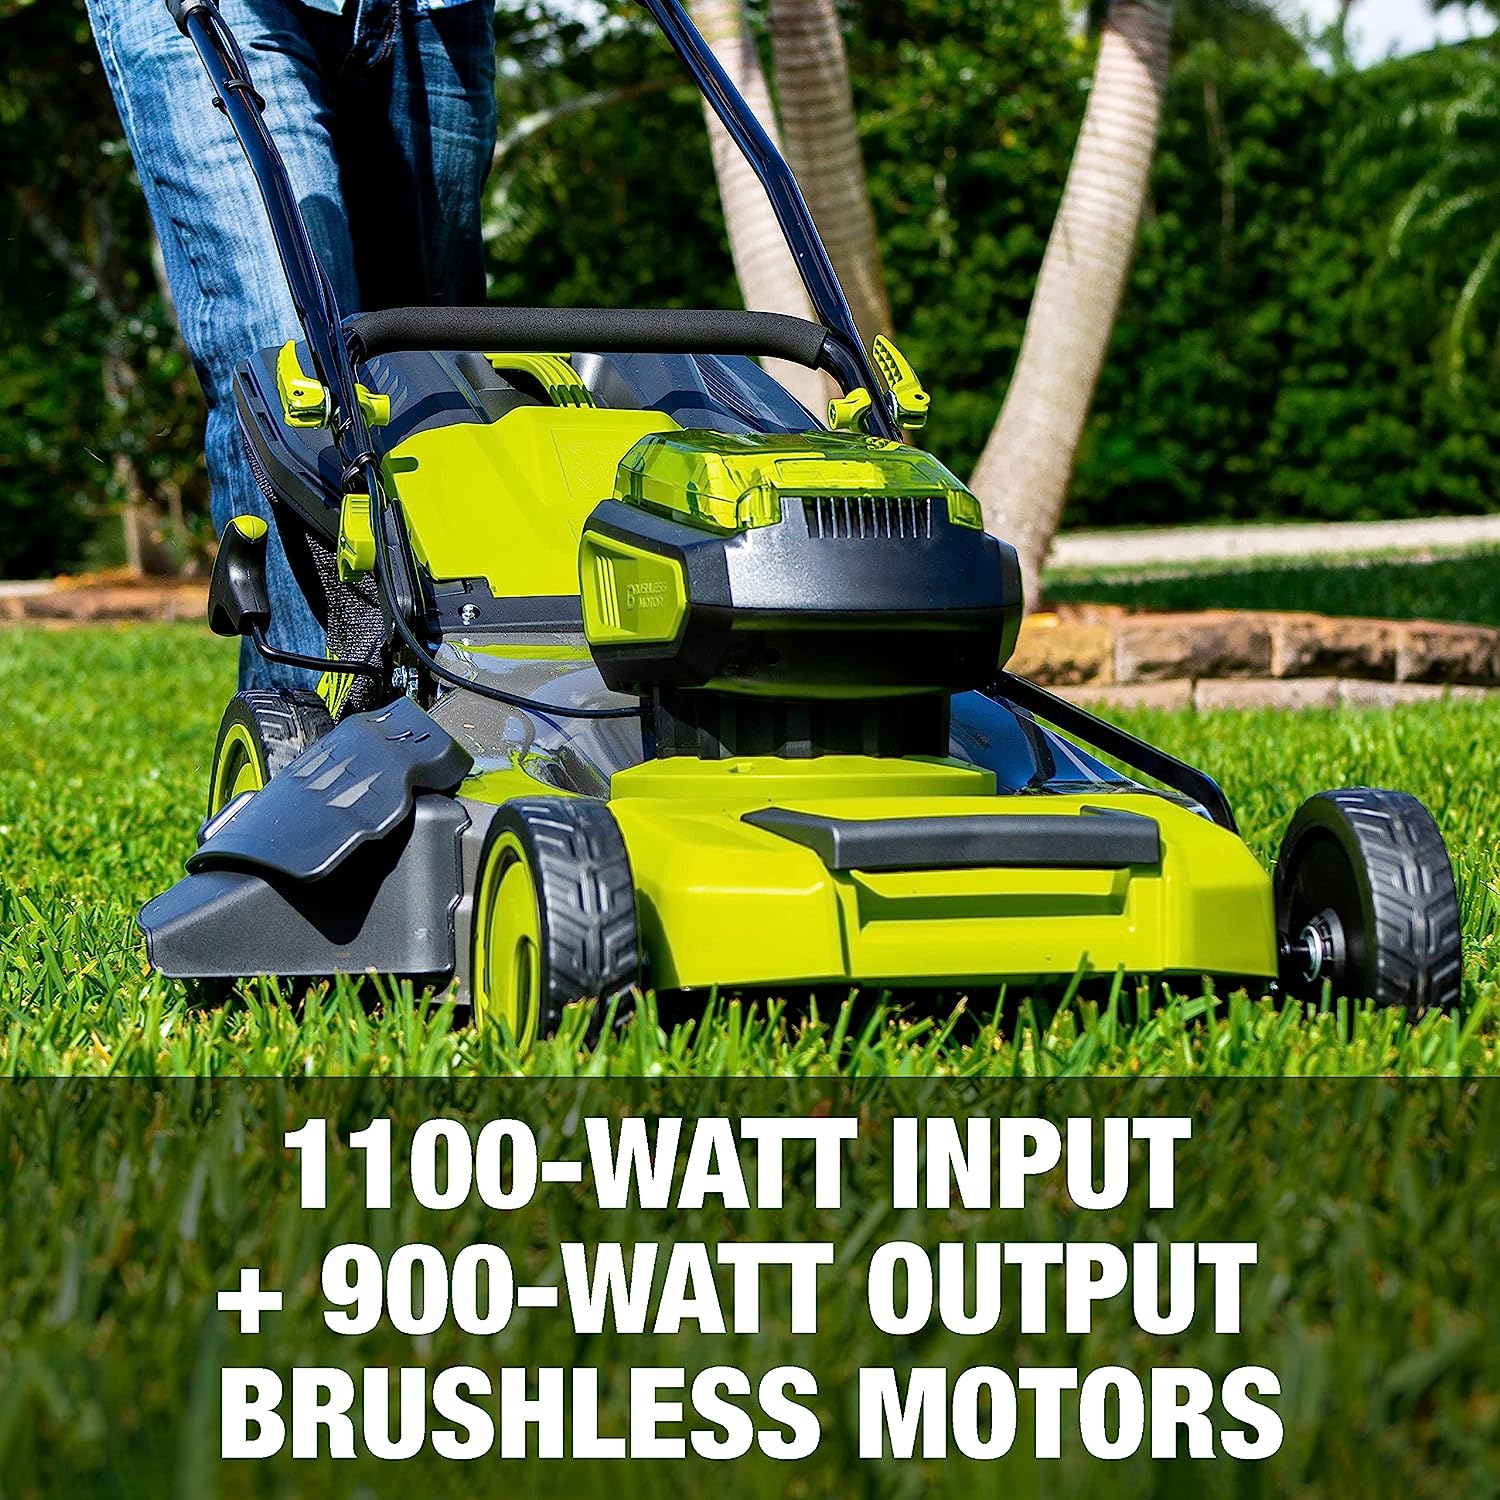 Sun Joe 24V-X2-21LM 48-Volt 21-Inch 1100-Watt Max Brushless Cordless Lawn Mower - $220